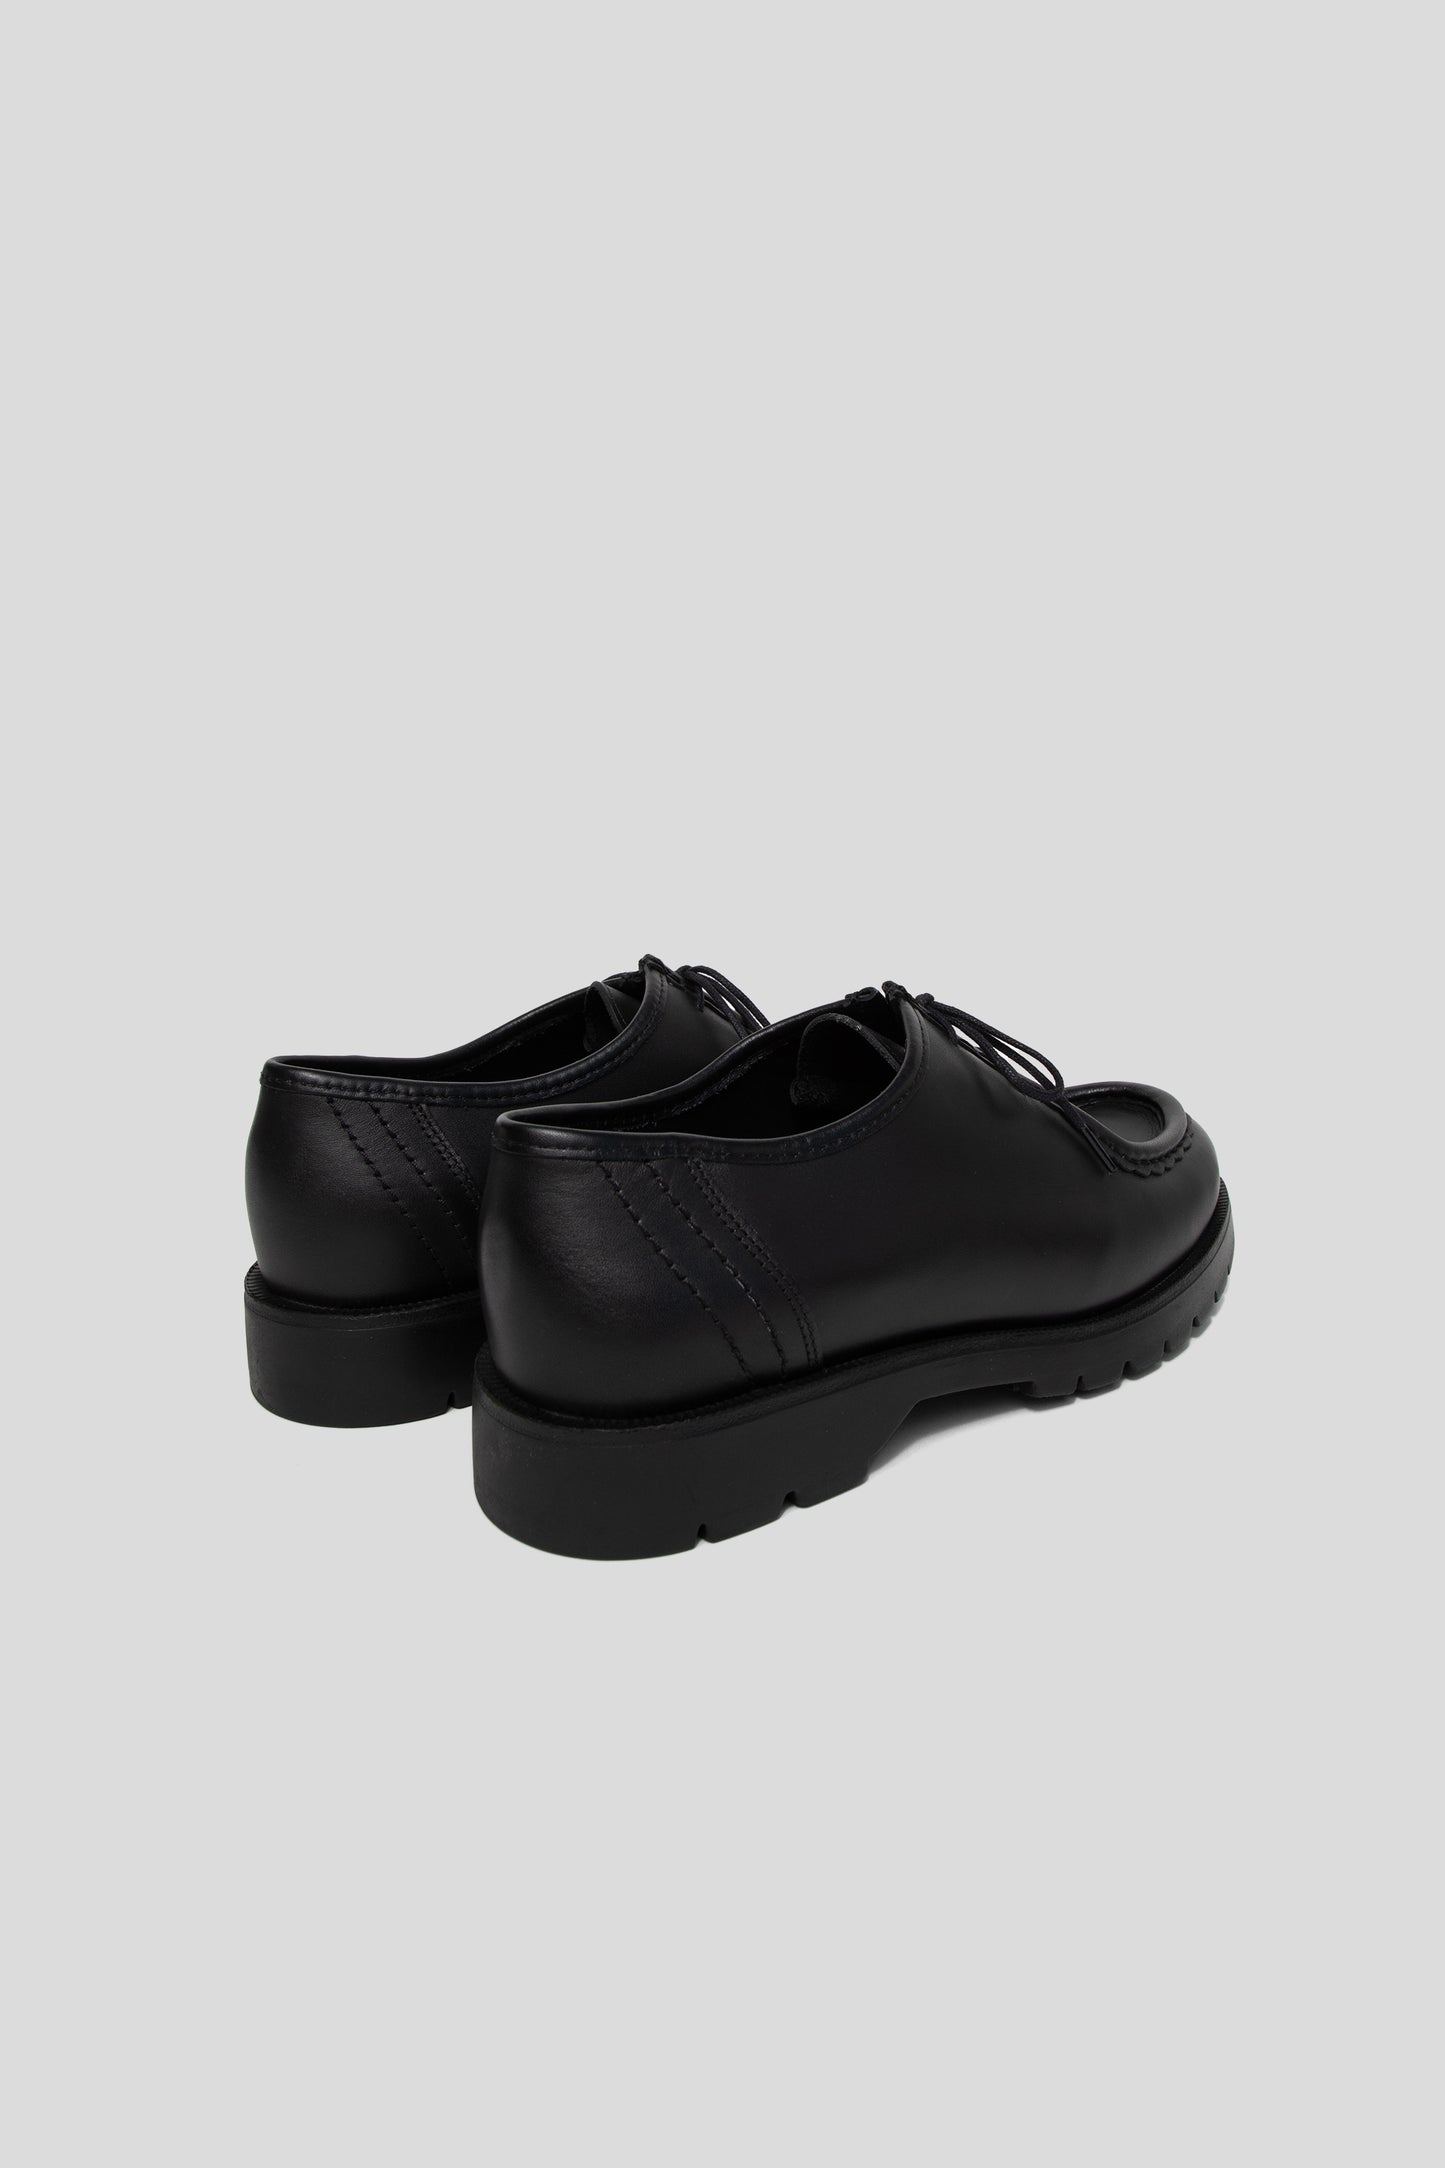 Kleman Padror Shoe in Black